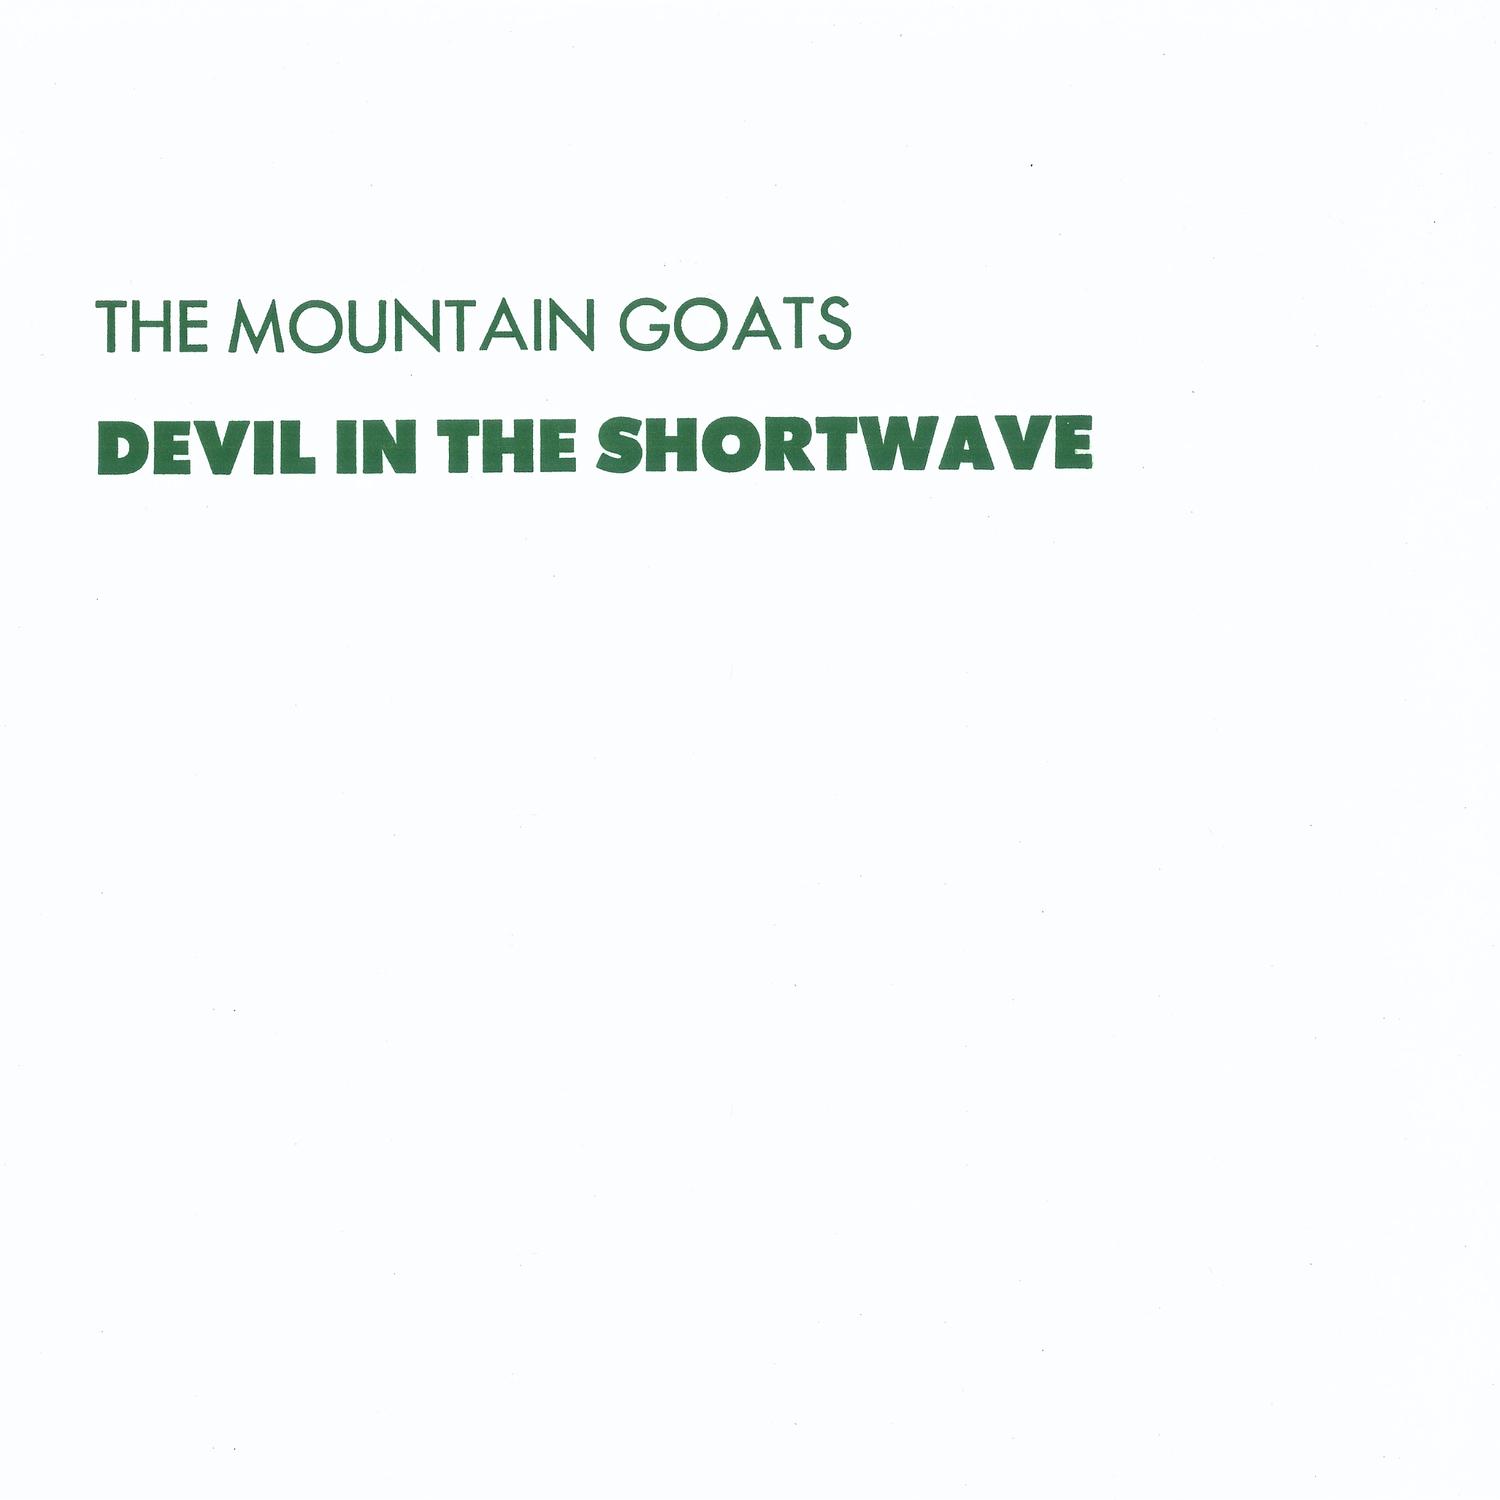 The Mountain Goats - Genesis 19: 1-2